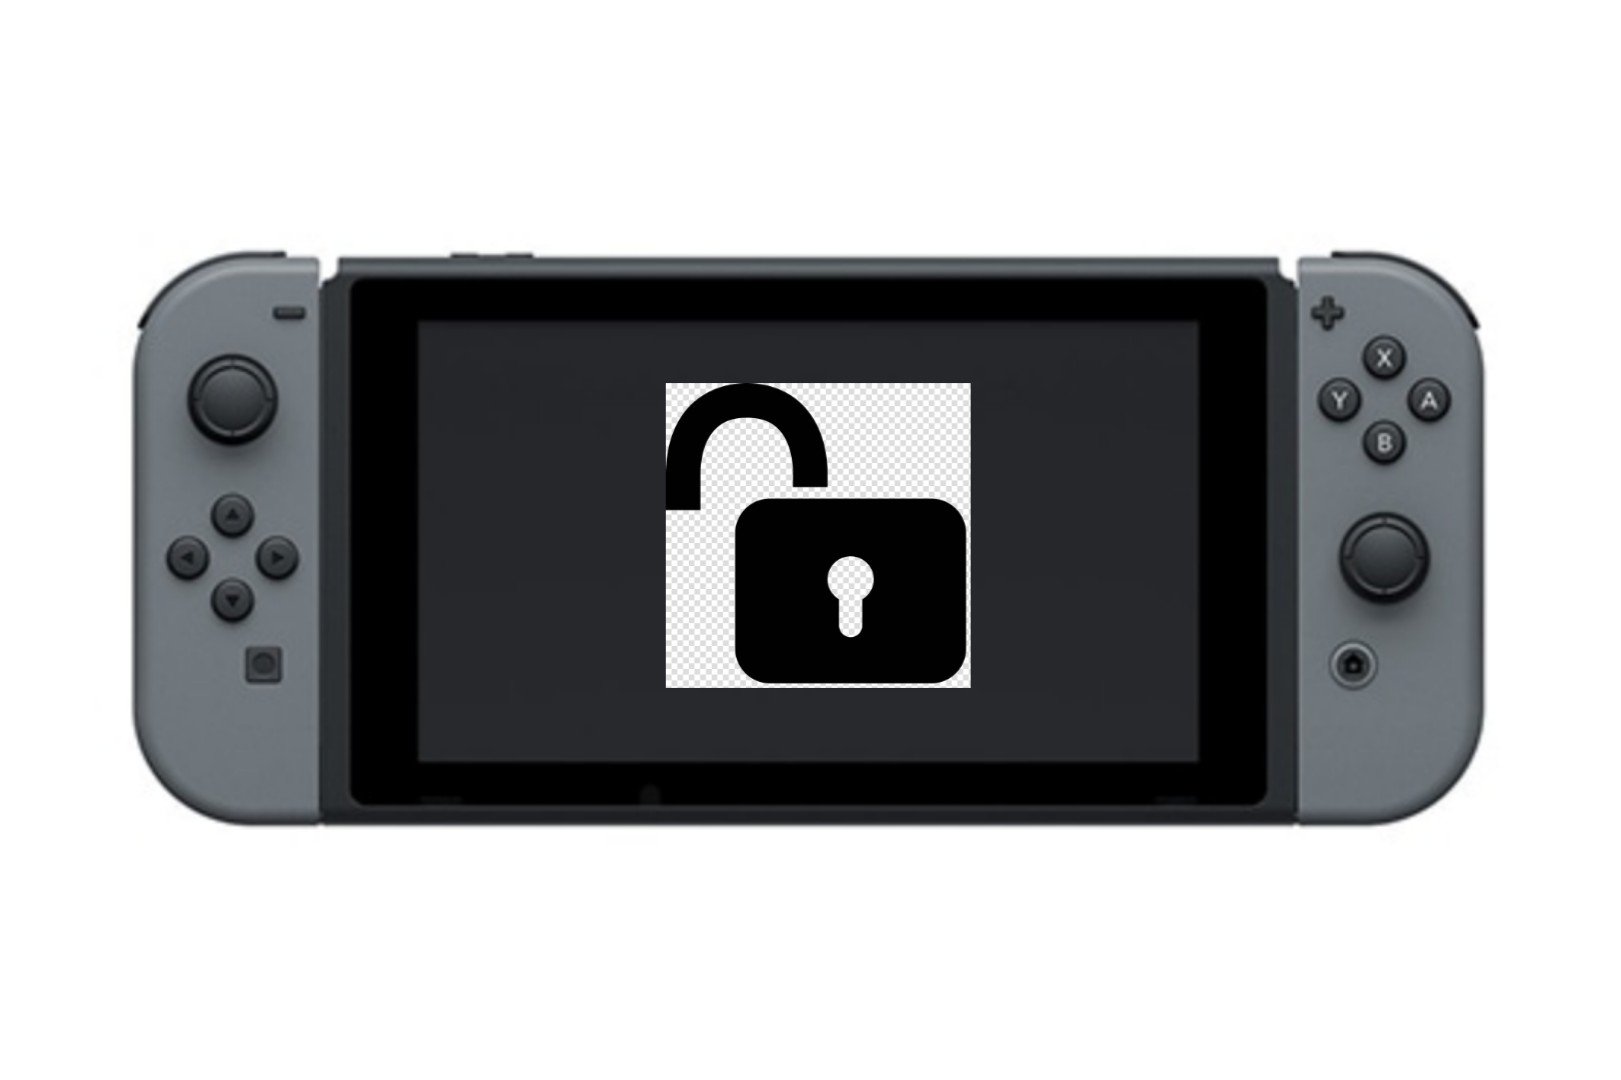 Nintendo Switch 'Mariko' units firmware keys dumped | Page 5 | GBAtemp.net  - The Independent Video Game Community